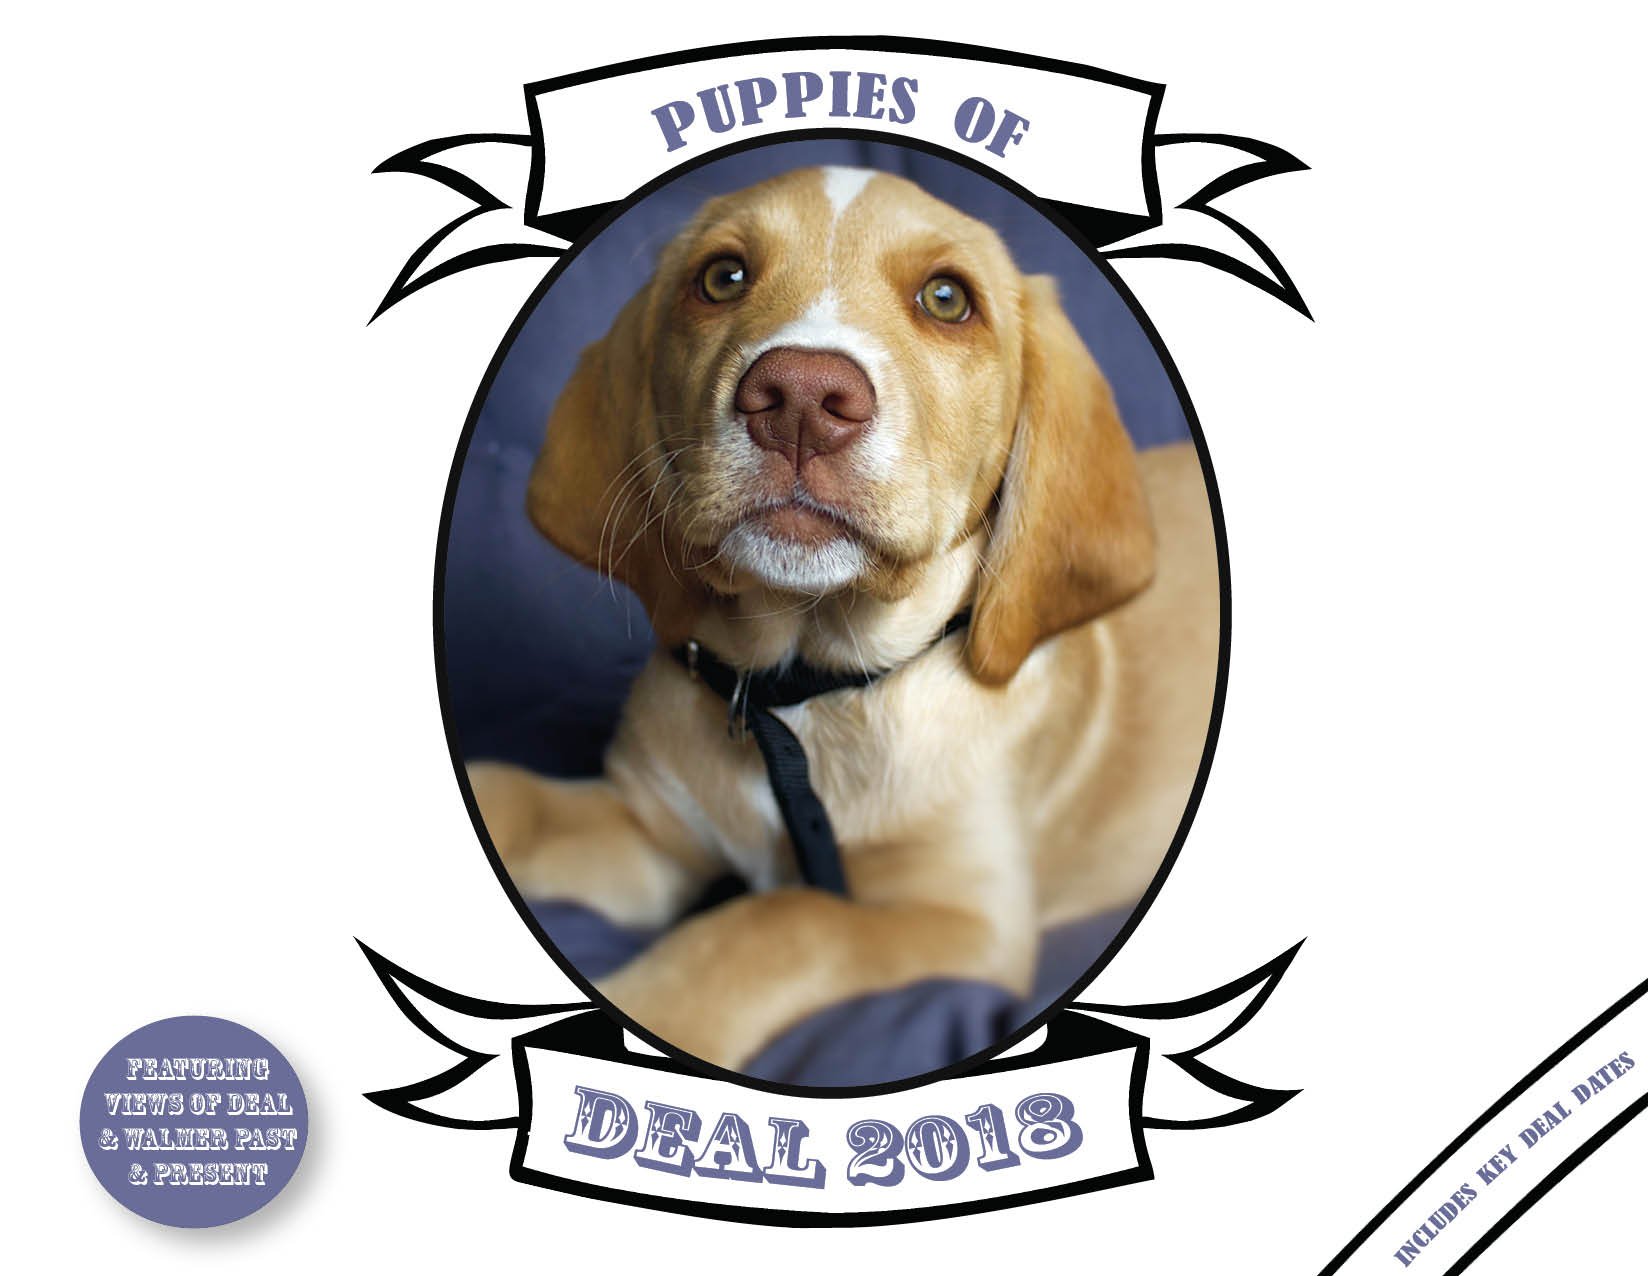 4 puppies of deal calendar cover.jpg